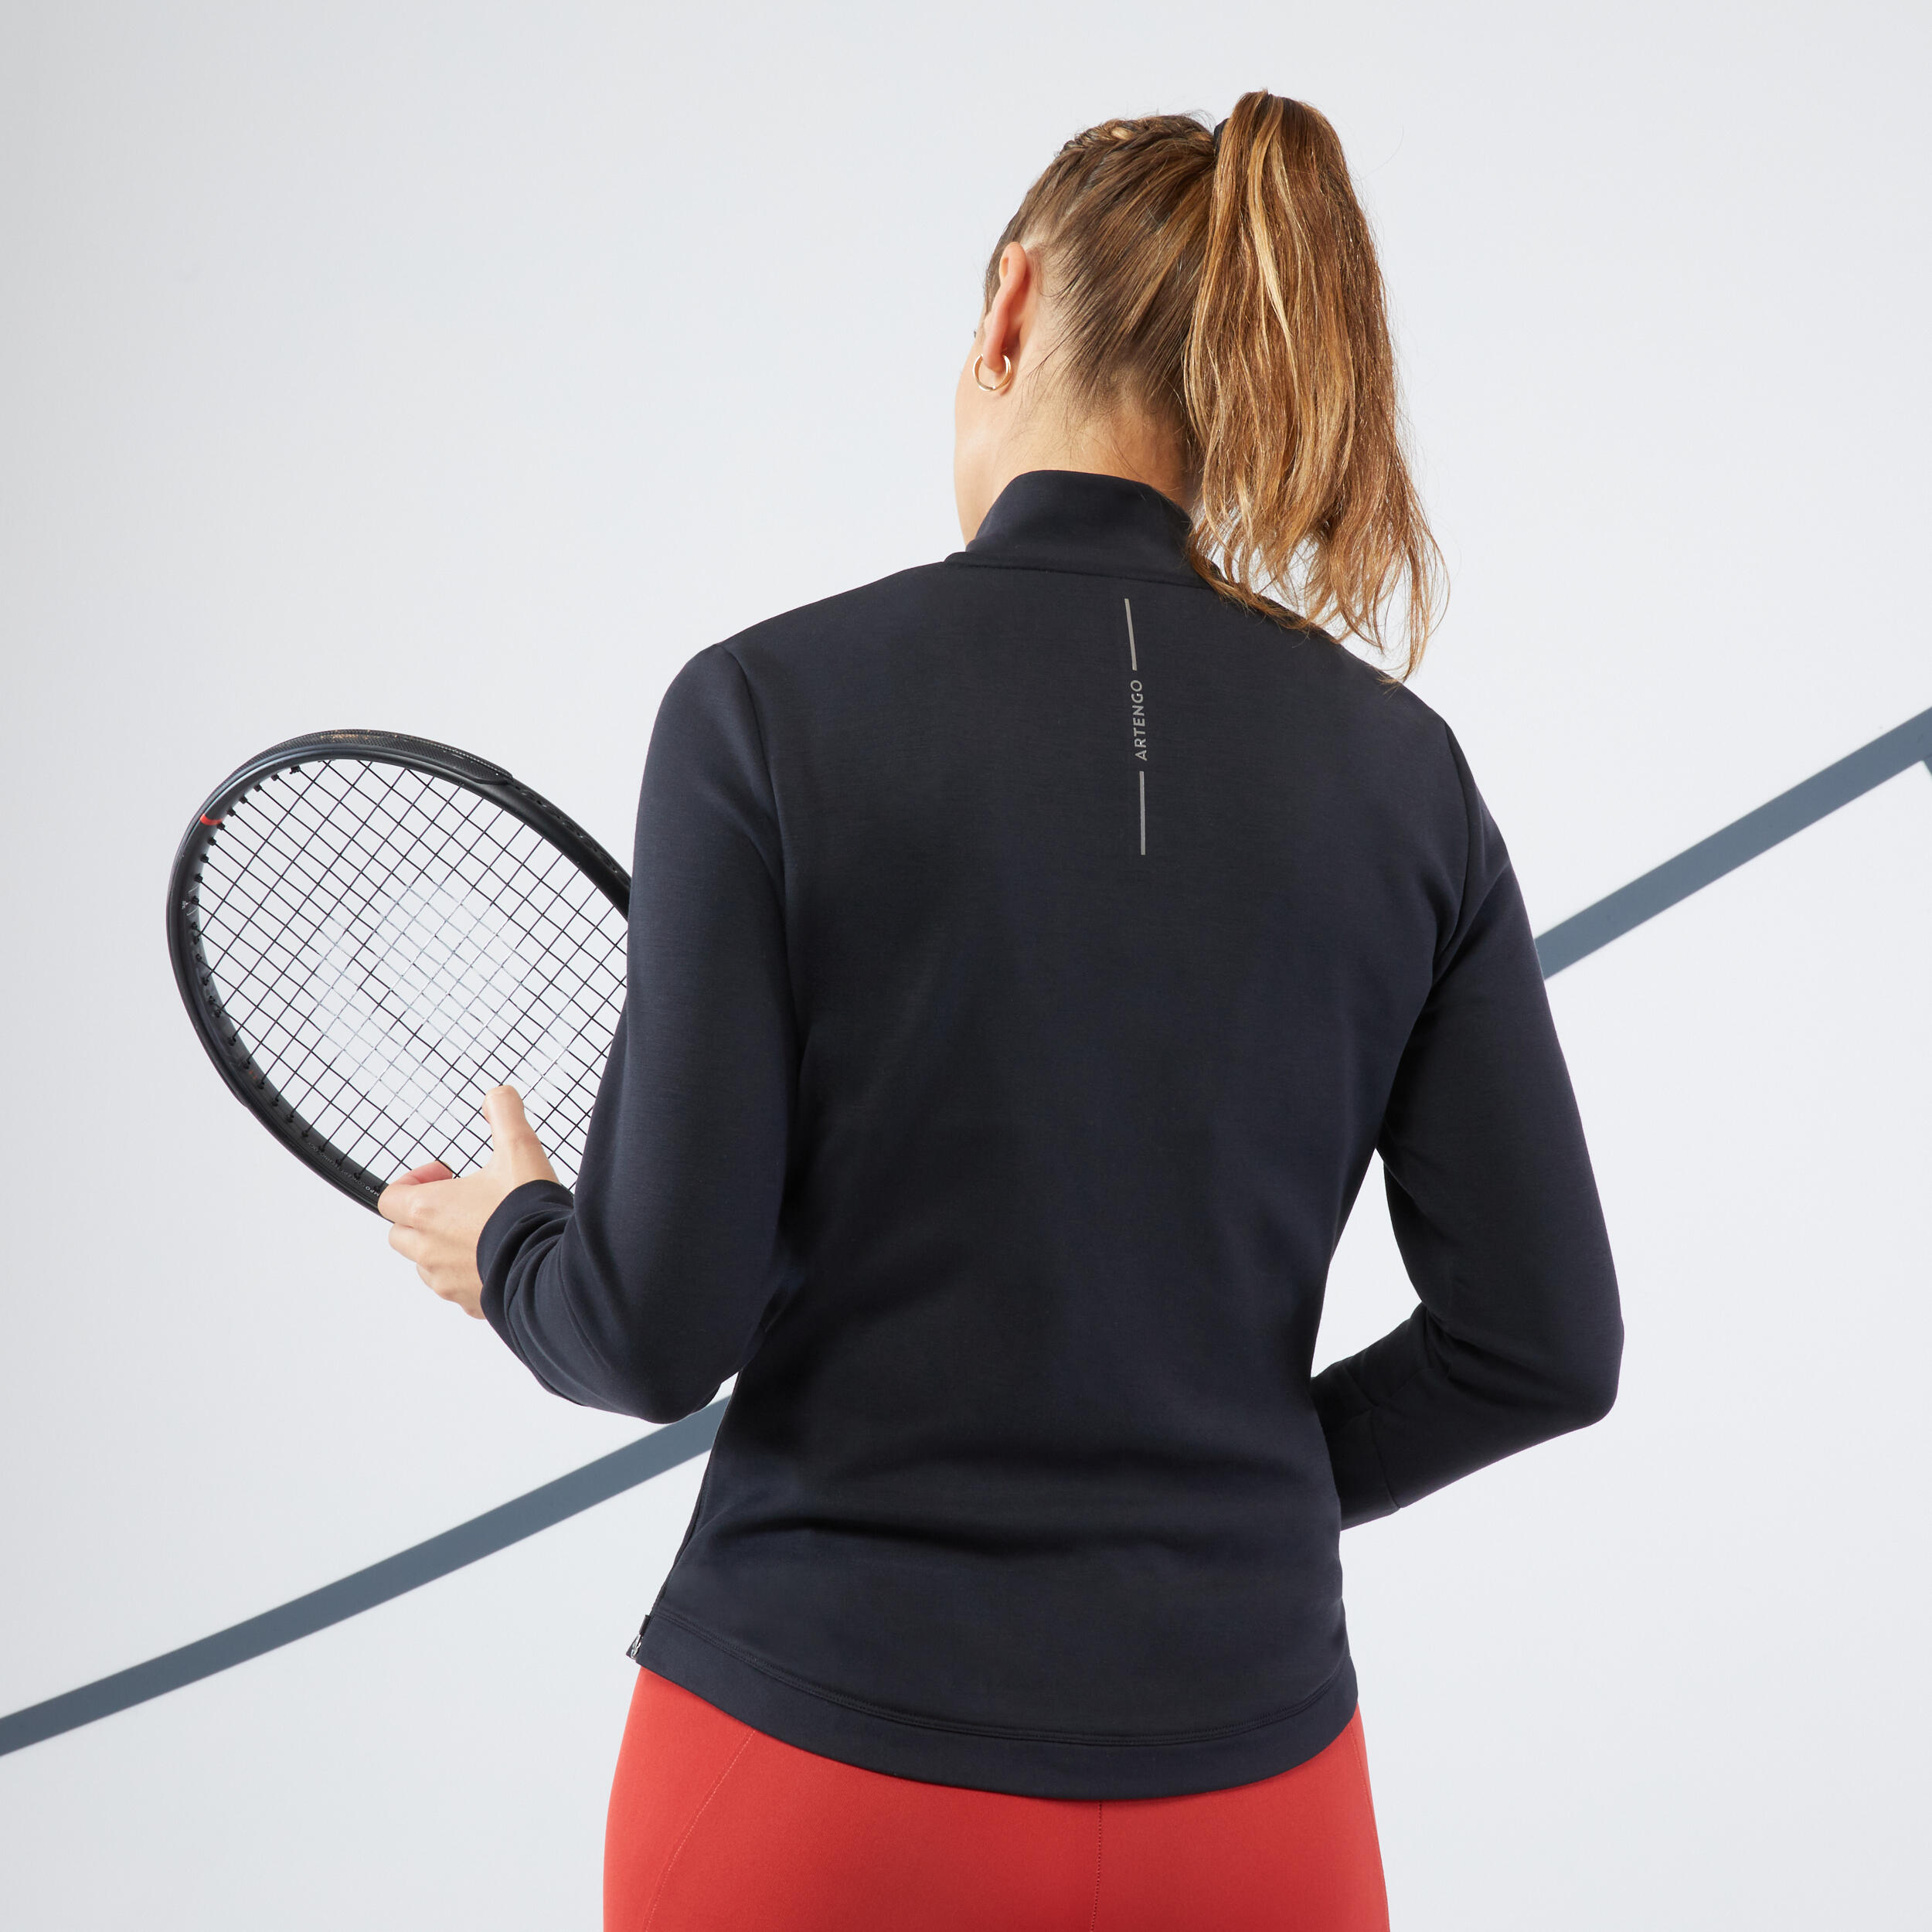 Women's Tennis Quick-Dry Soft Jacket Dry 900 - Black 5/5